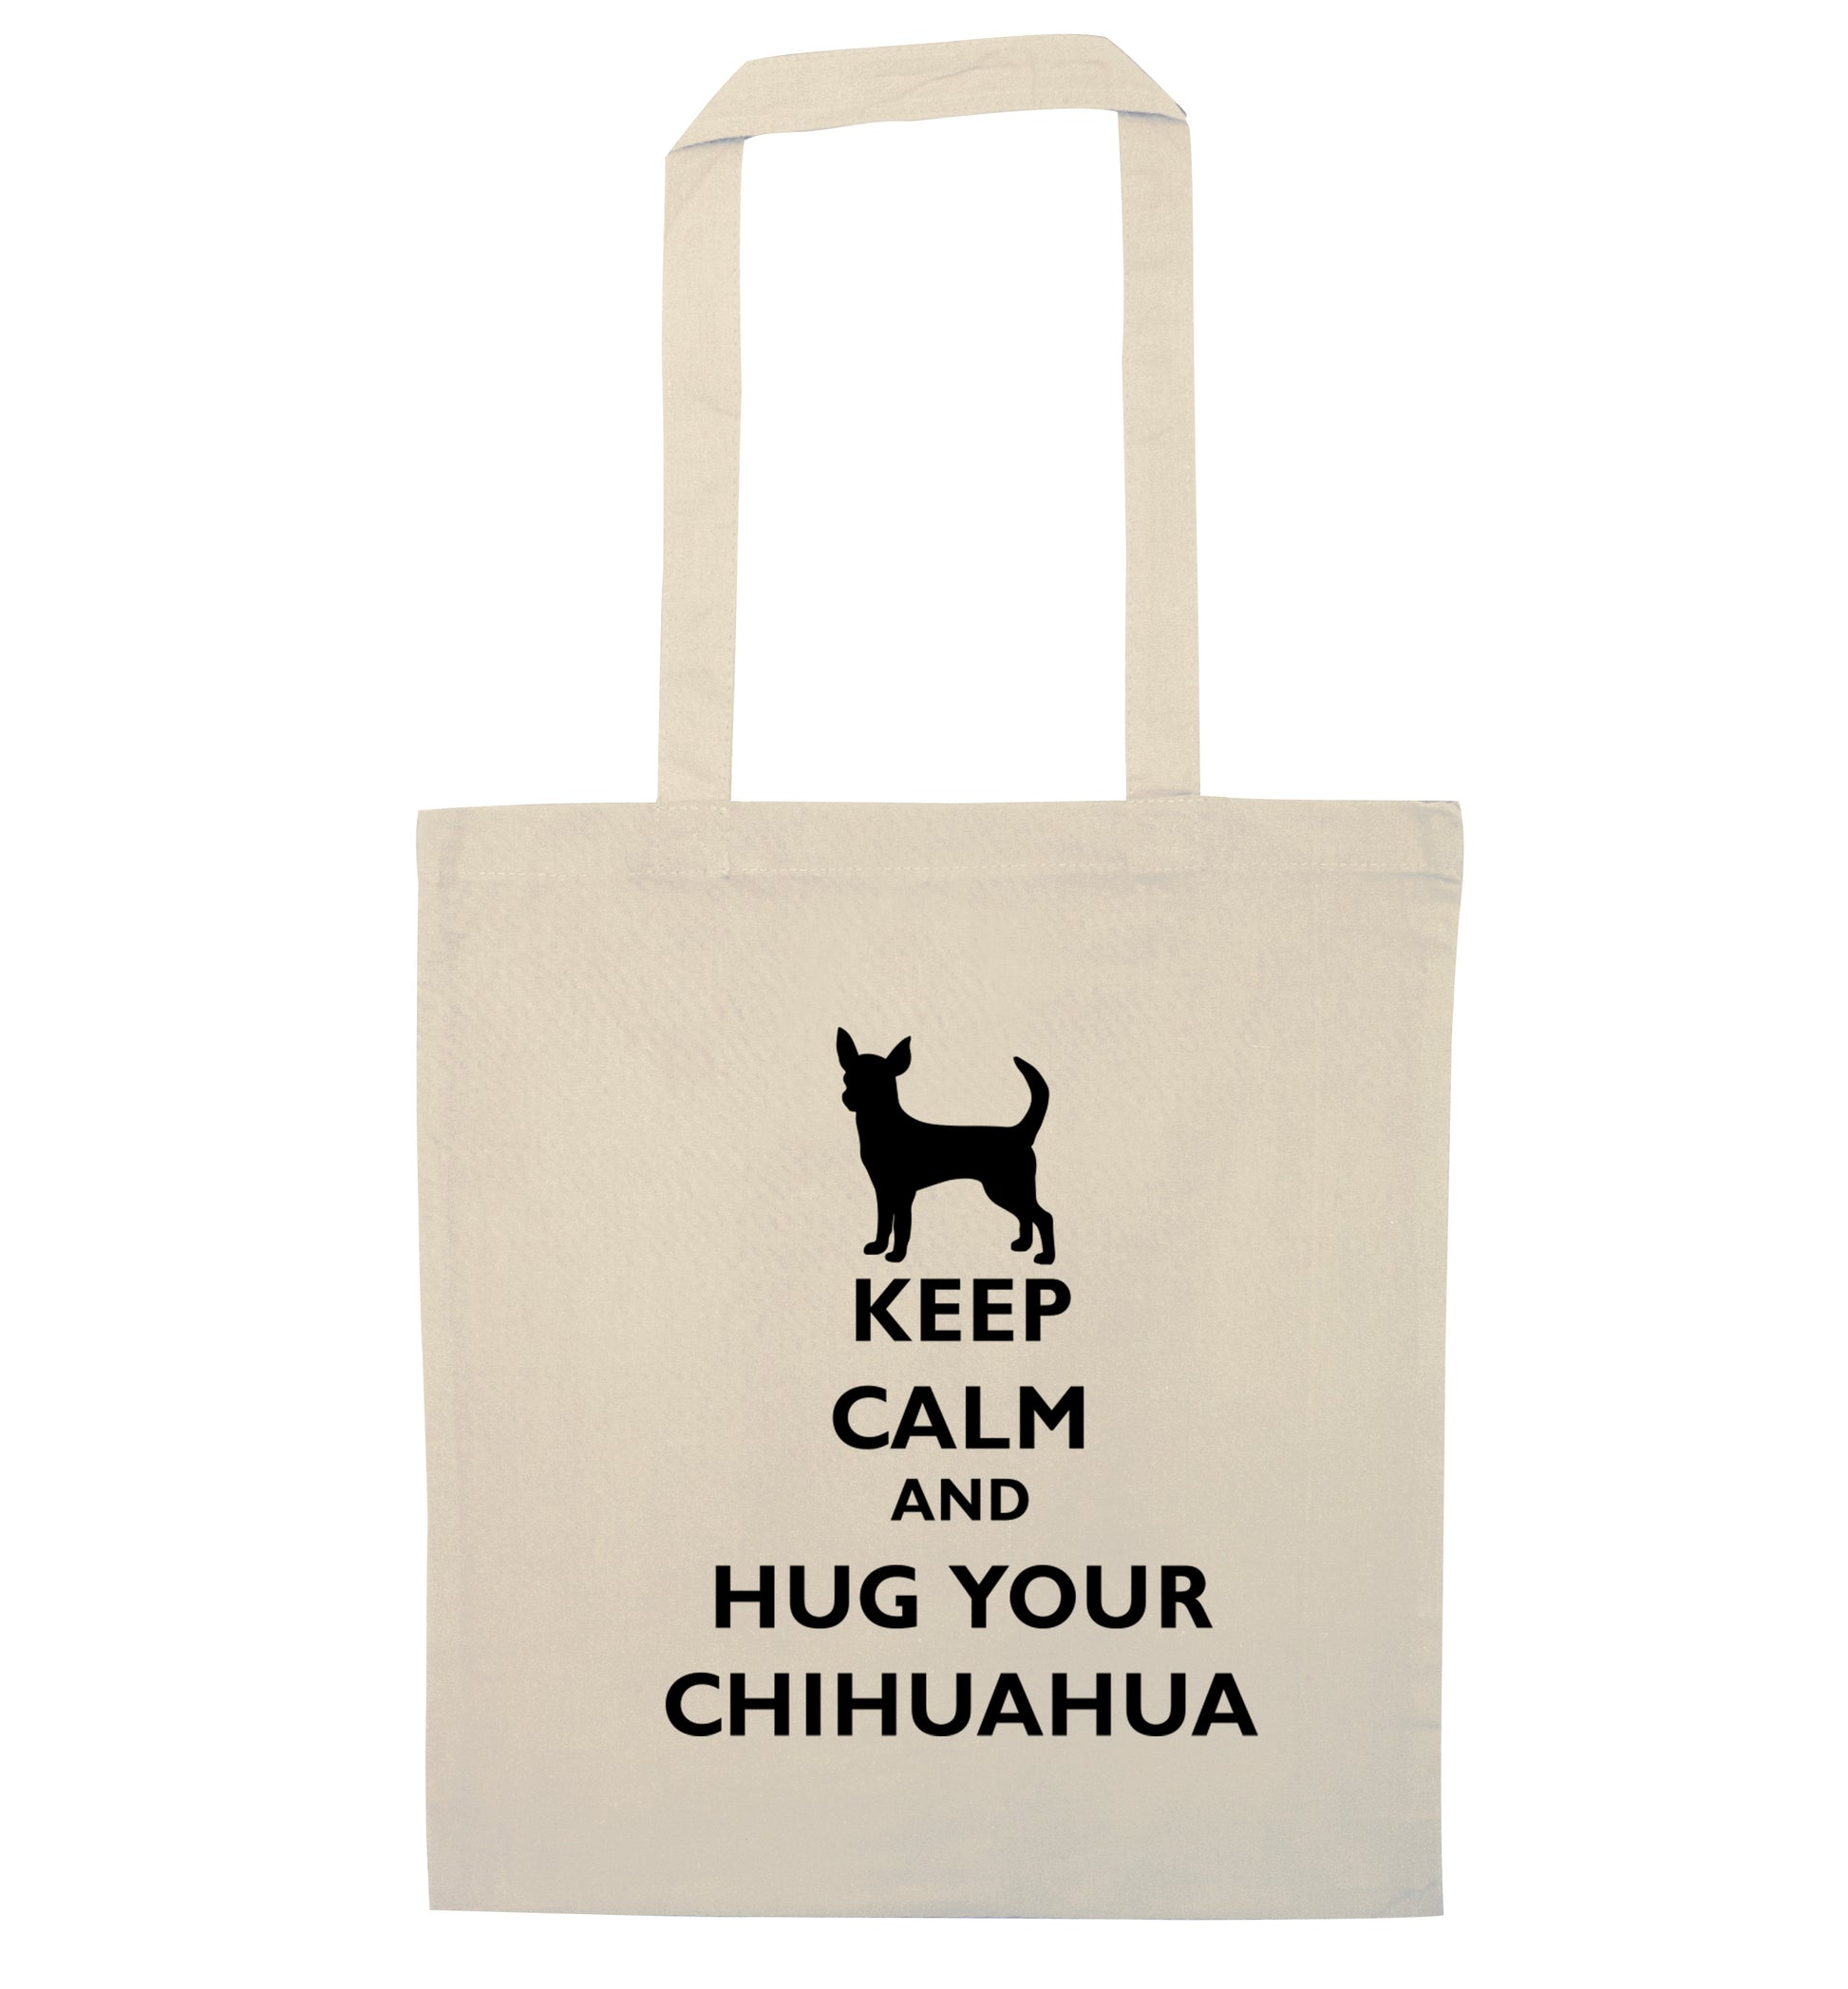 Keep calm and hug your chihuahua natural tote bag